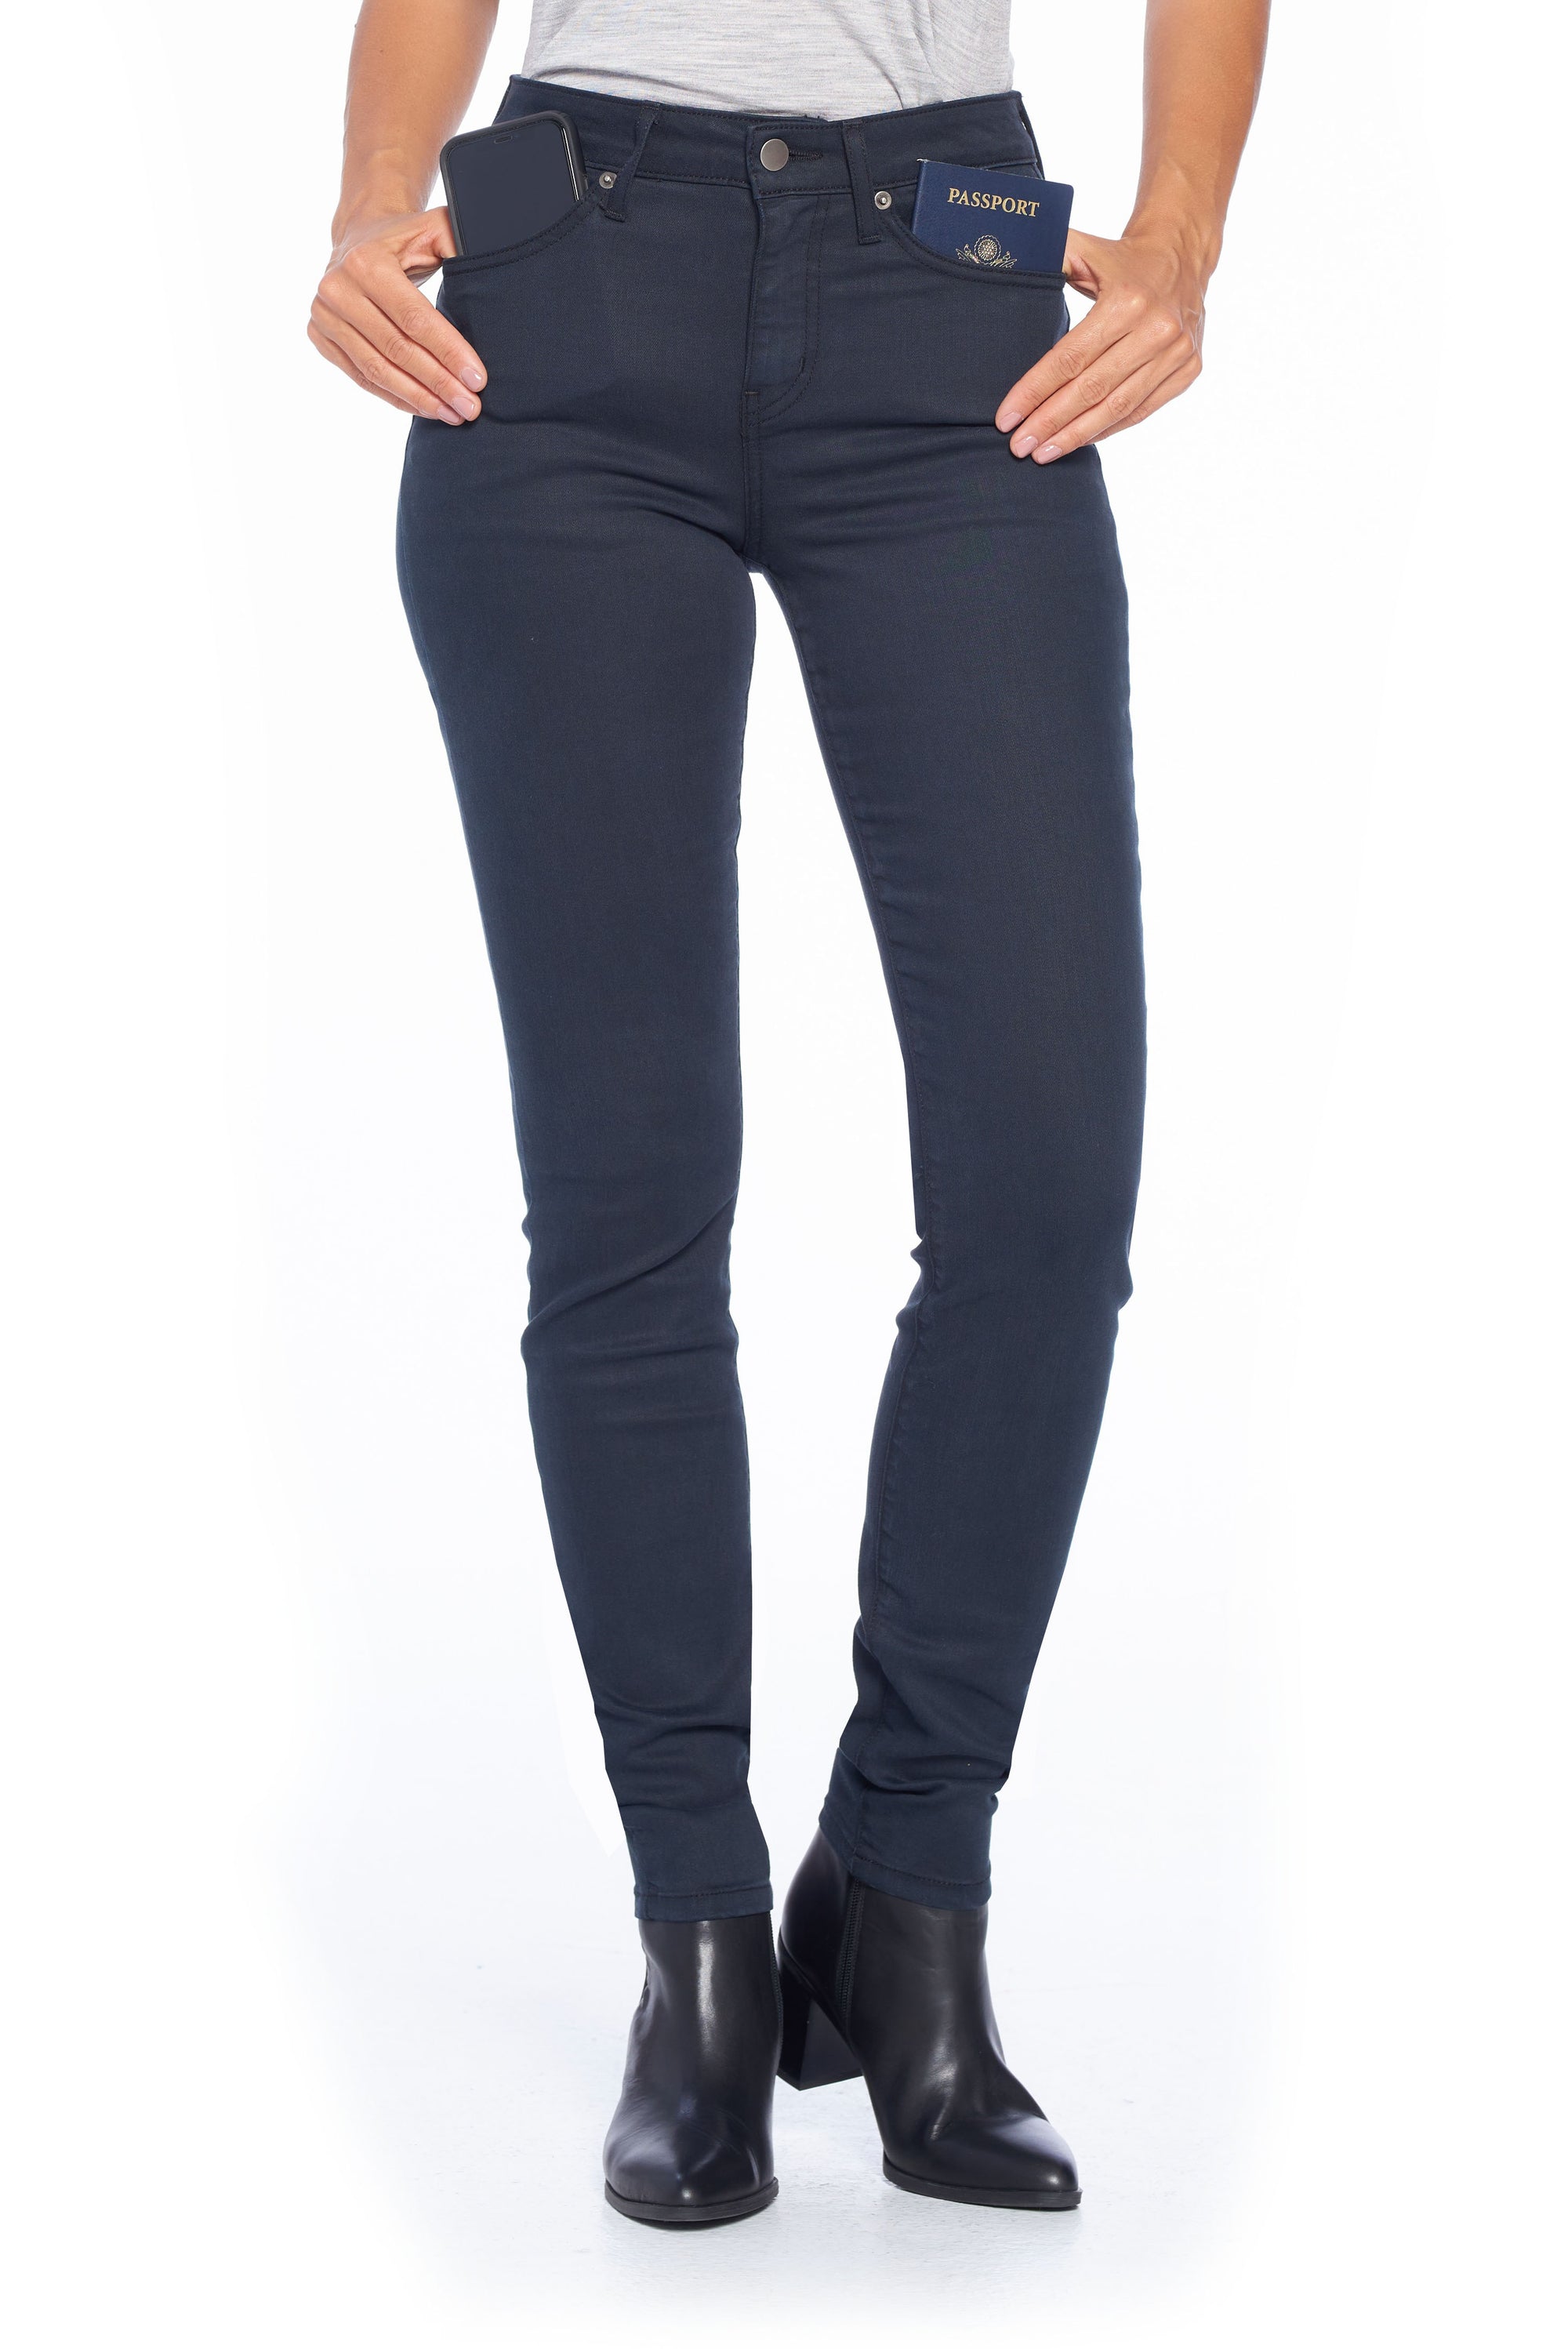 Skinny travel jeans in vintage black color by Aviator